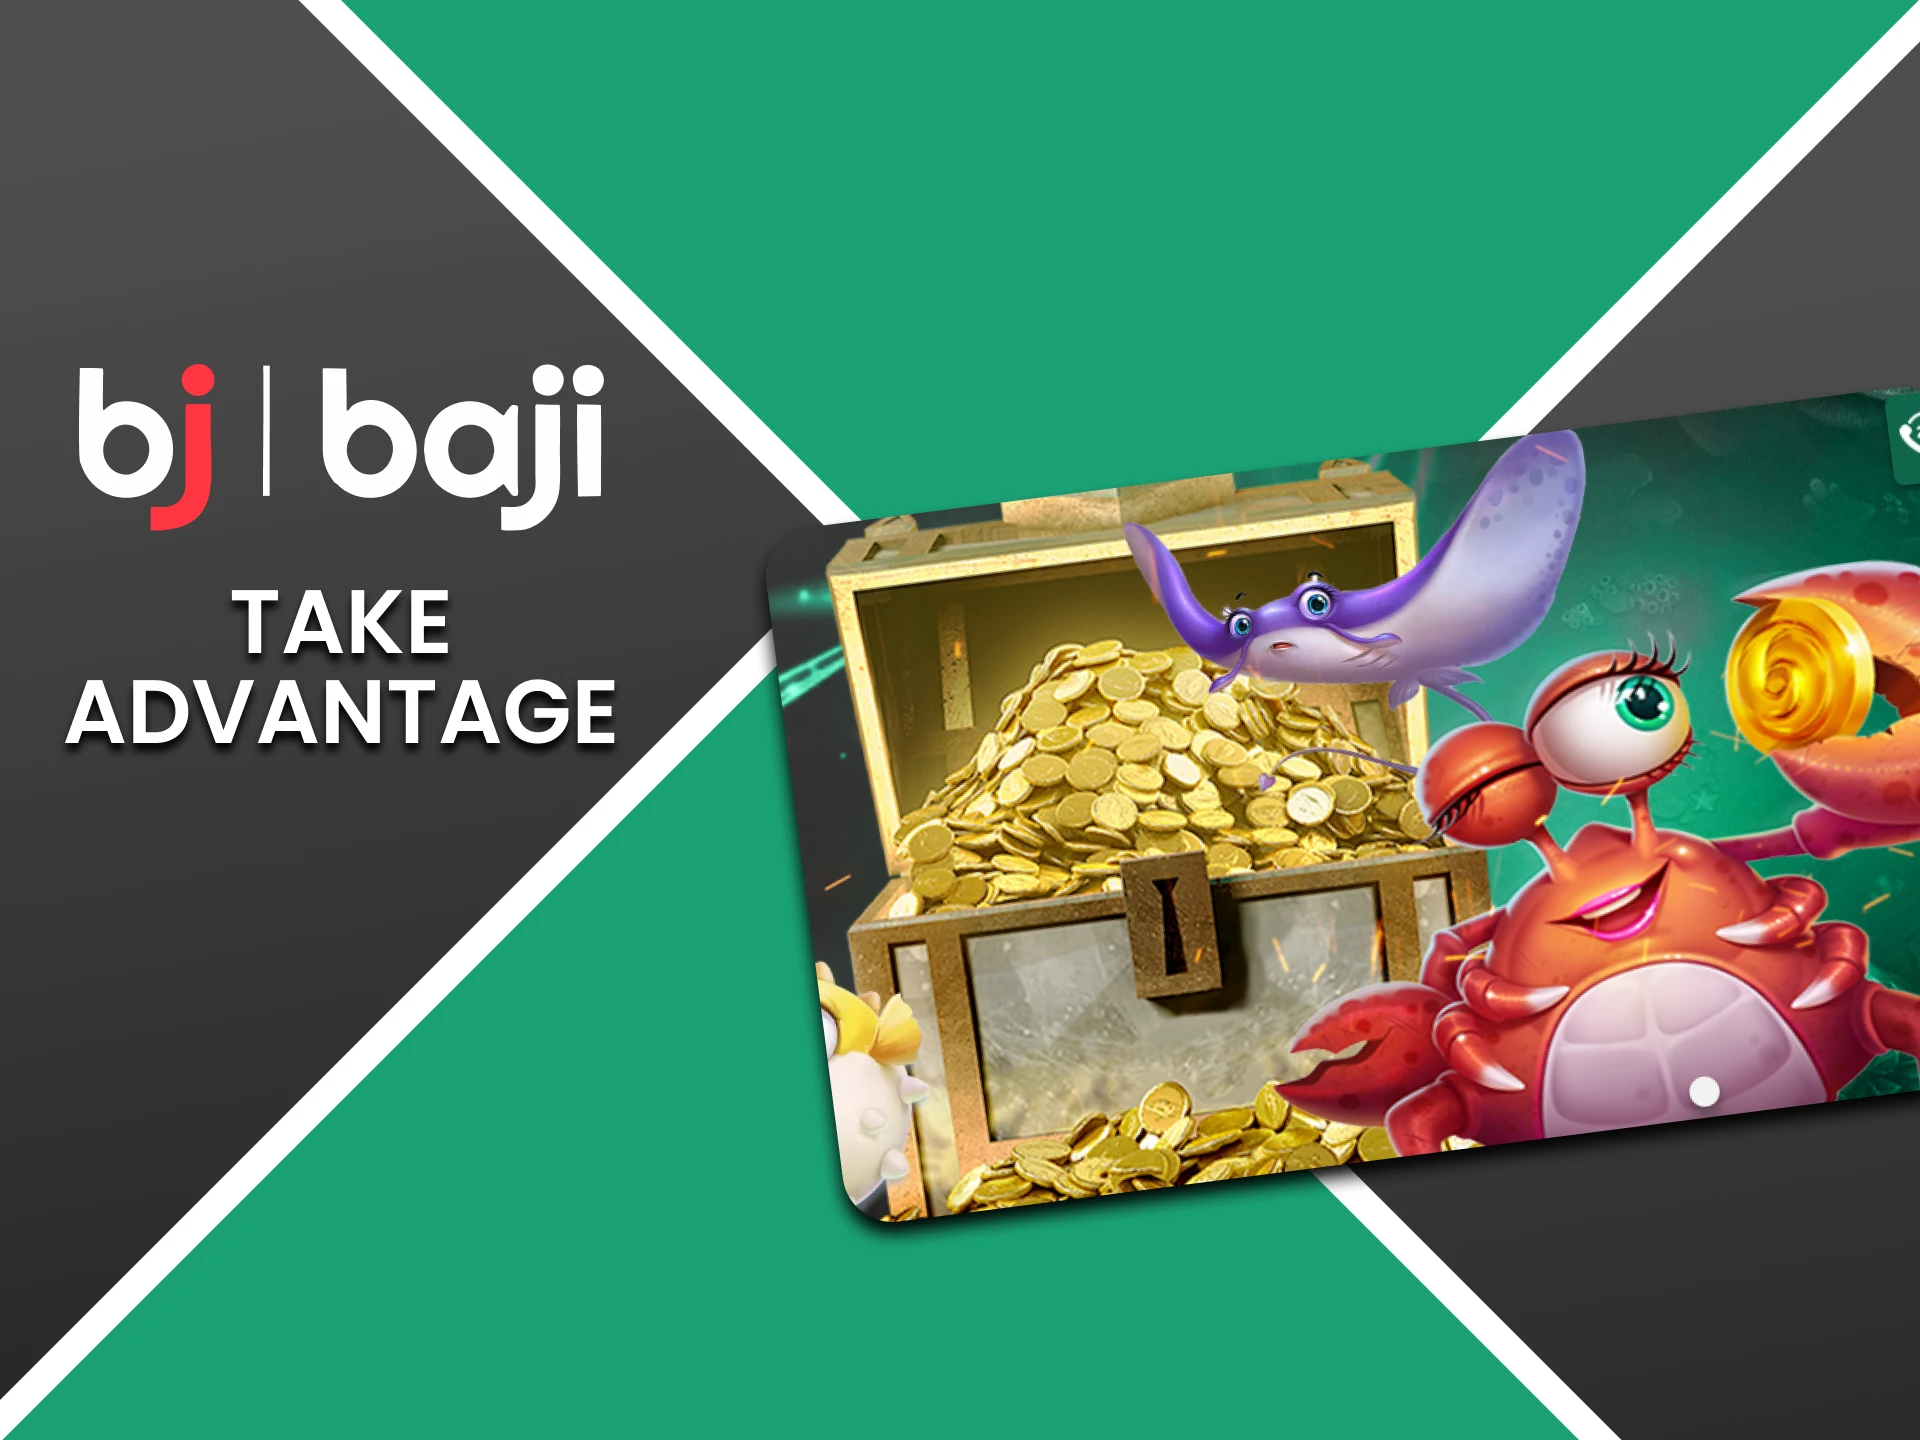 Take advantage of the bonus advantage in Baji fishing games.